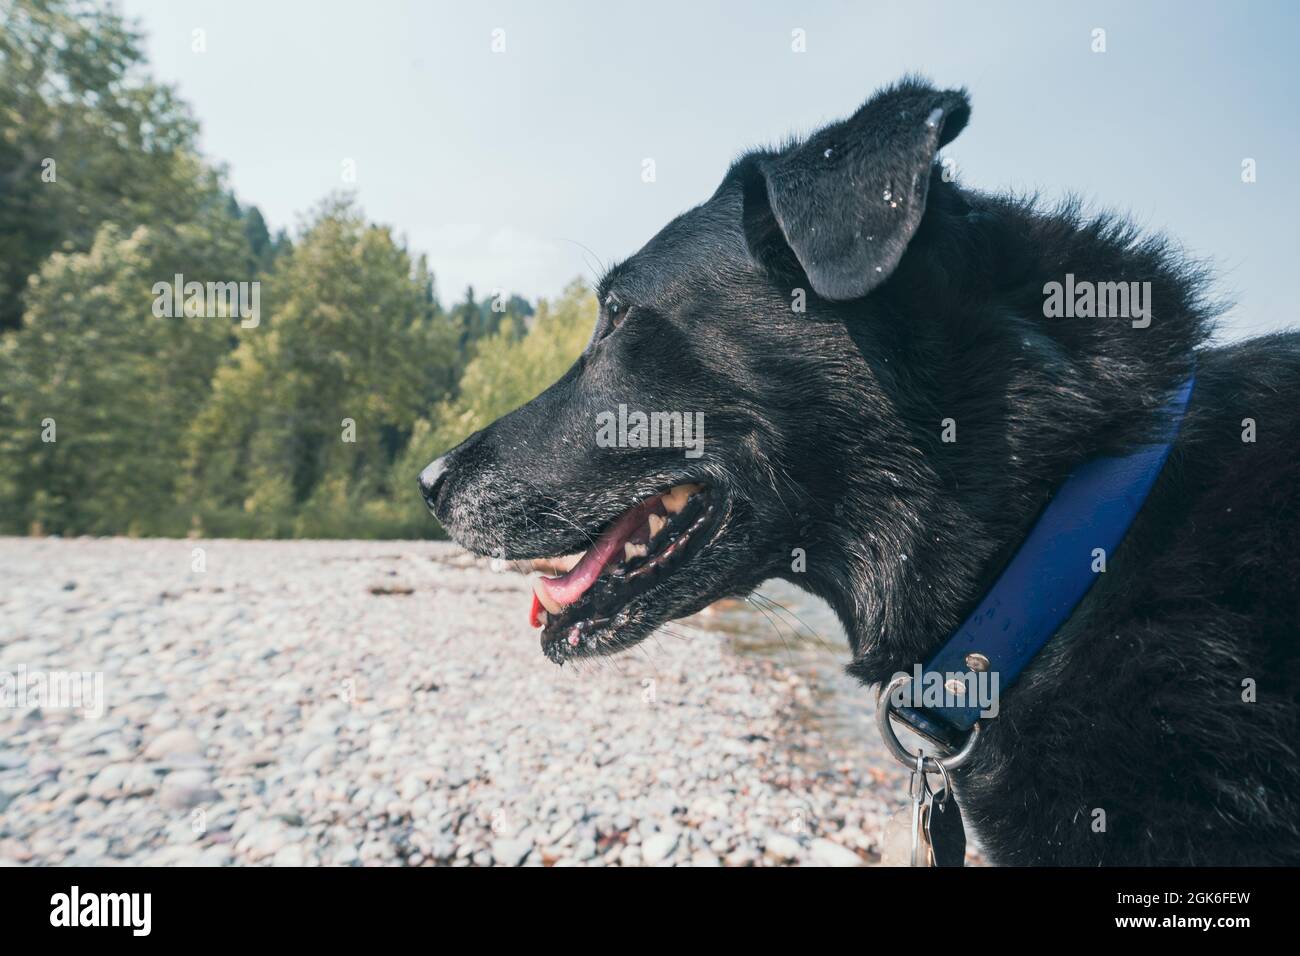 Black labrador retriever dog near a creek and log, playing. Tounge out Stock Photo